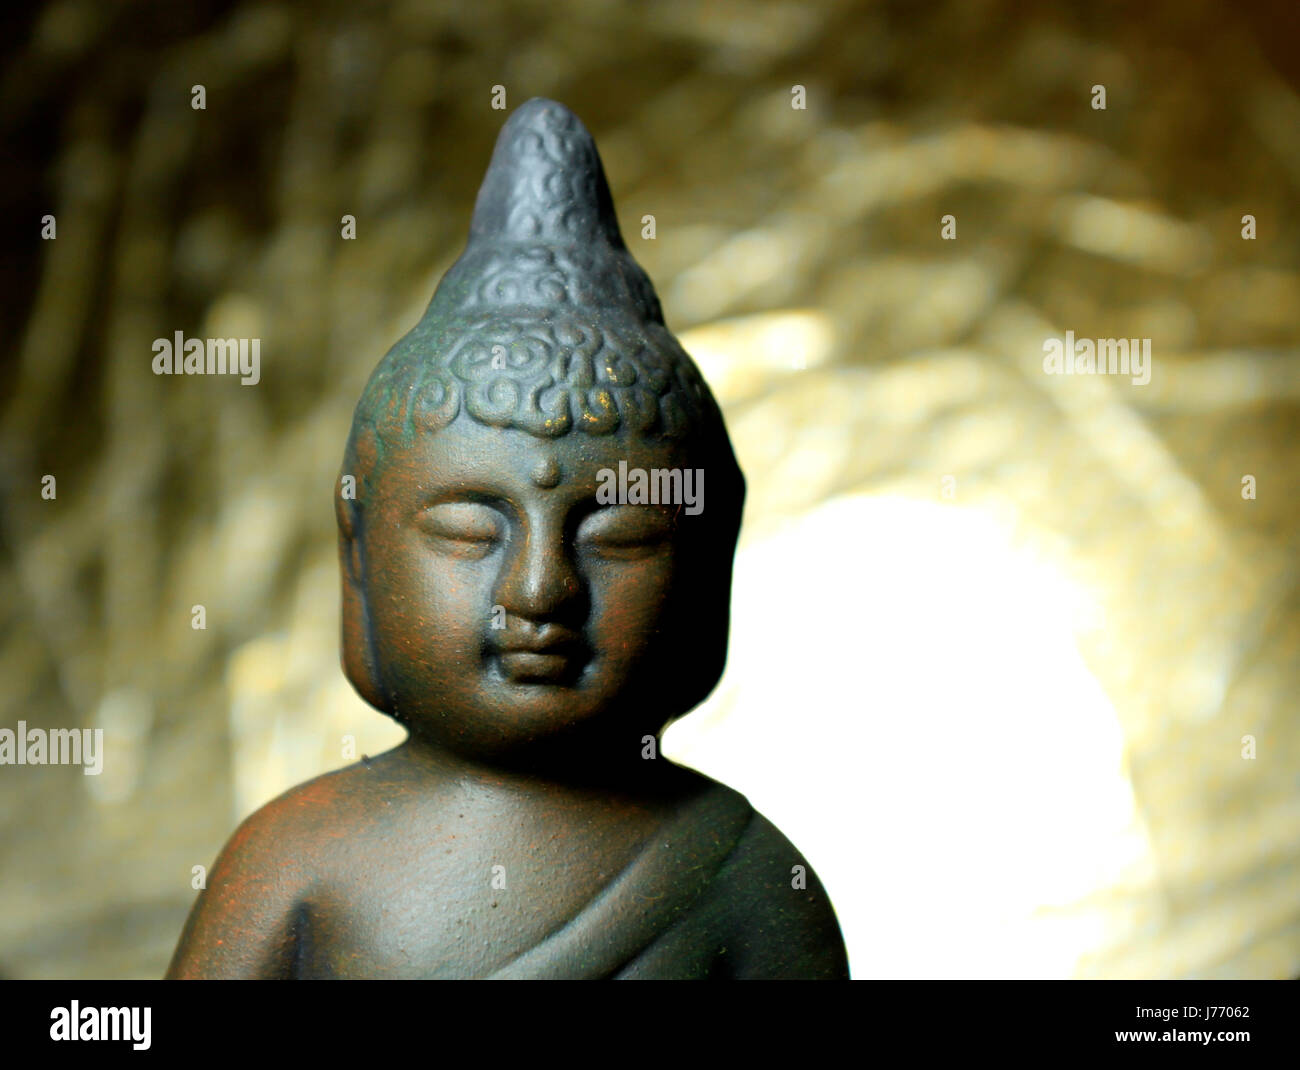 belief buddha peace meditation adore idol zen buddhism macro close-up macro Stock Photo